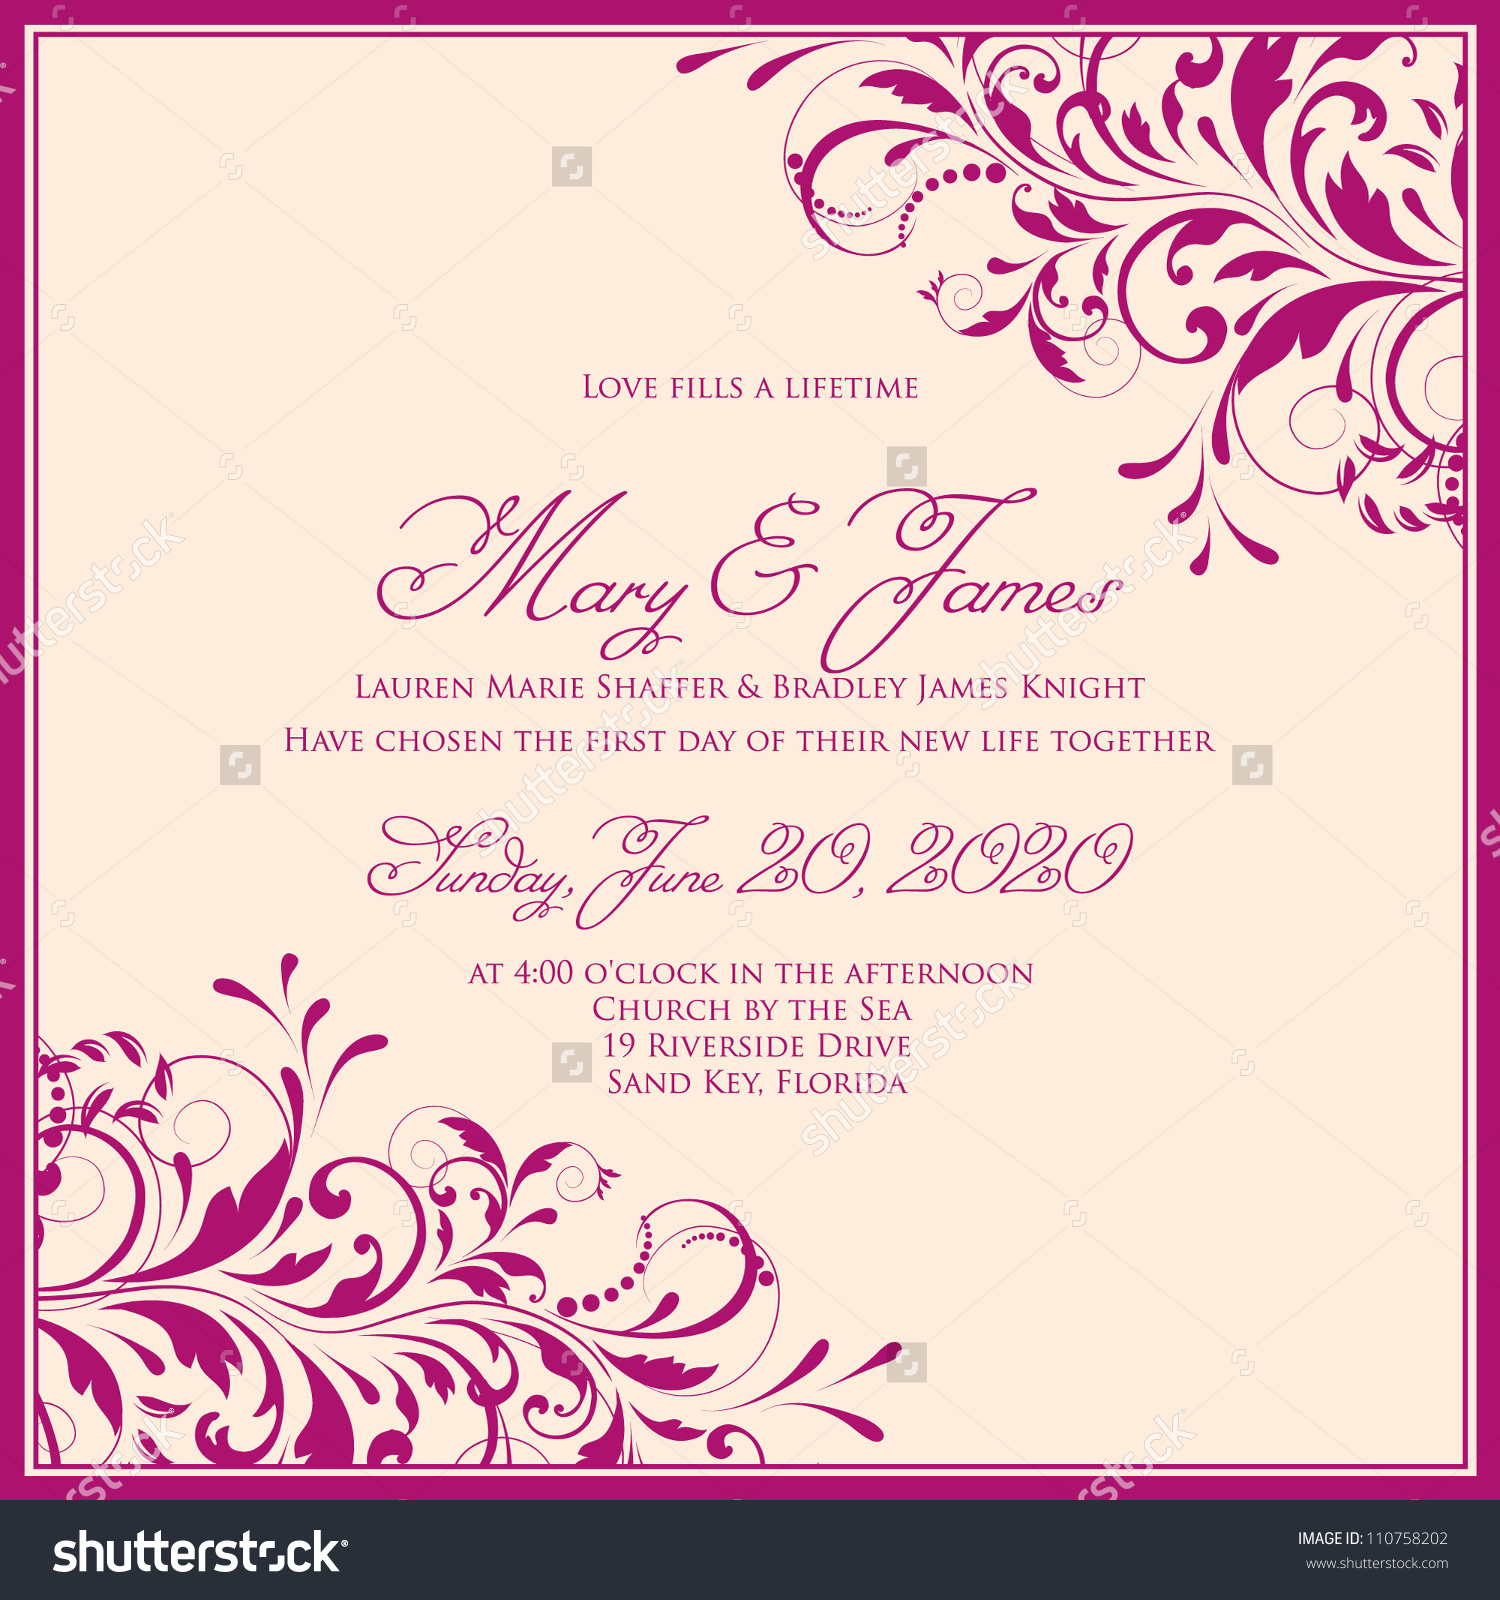 Incredible Invitation Wedding Card Wedding Card Invitation ...